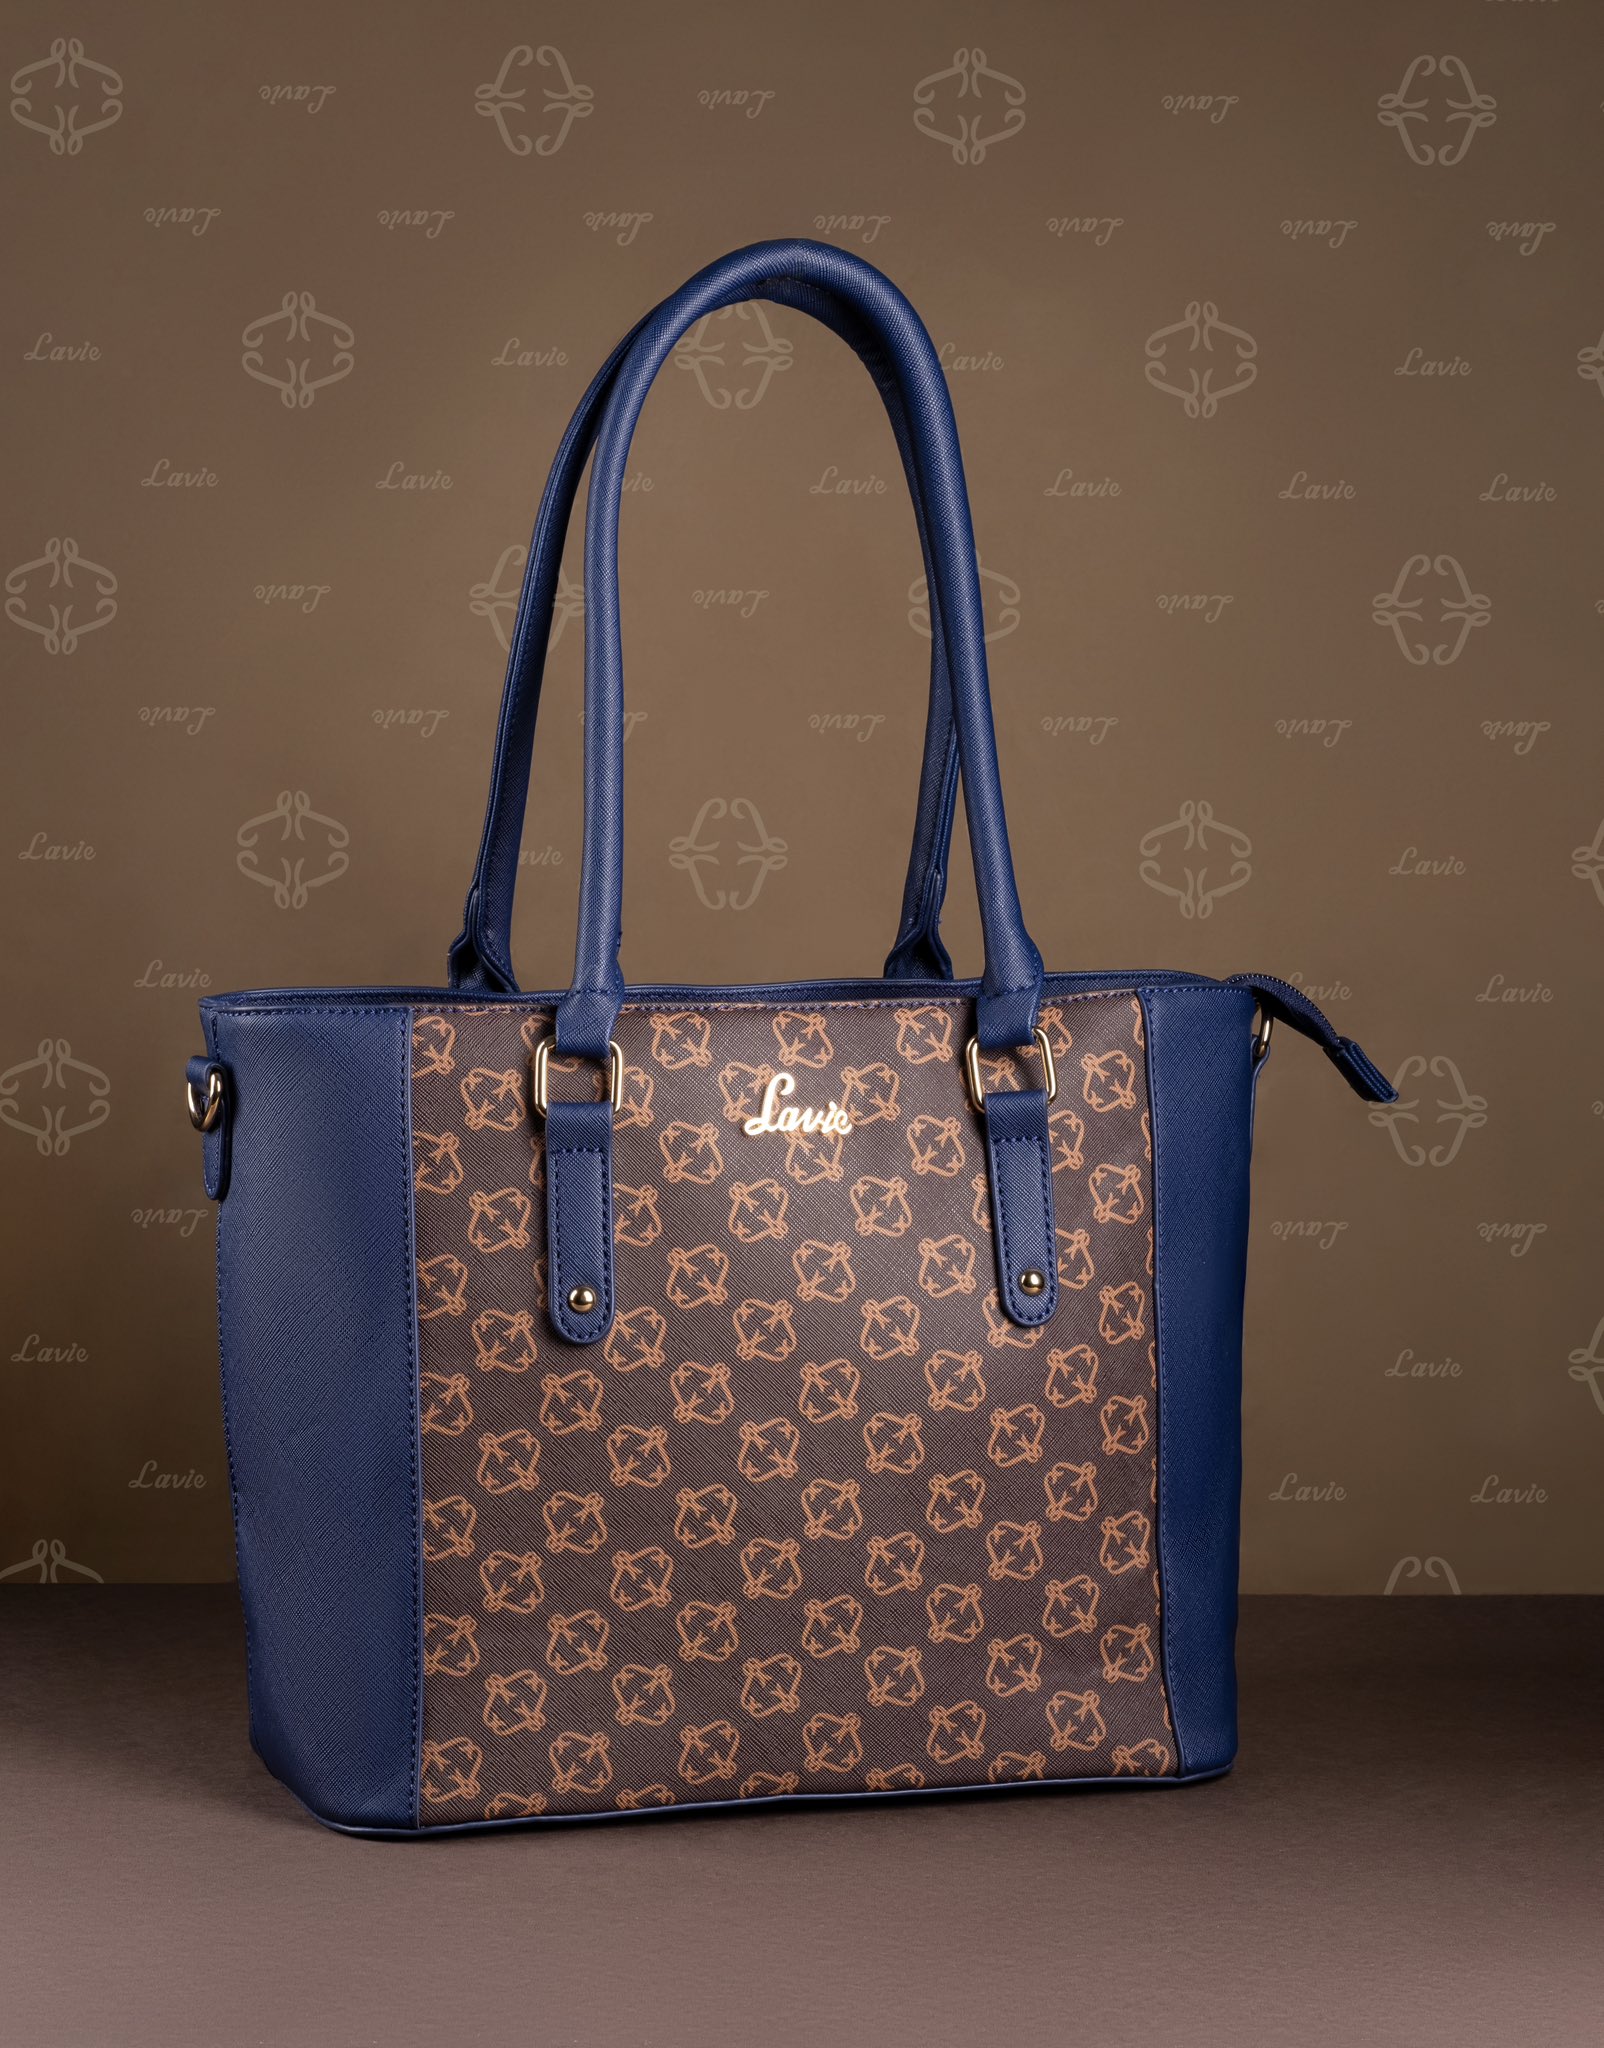 LAVIE Bags & Handbags for Women sale - discounted price | FASHIOLA INDIA